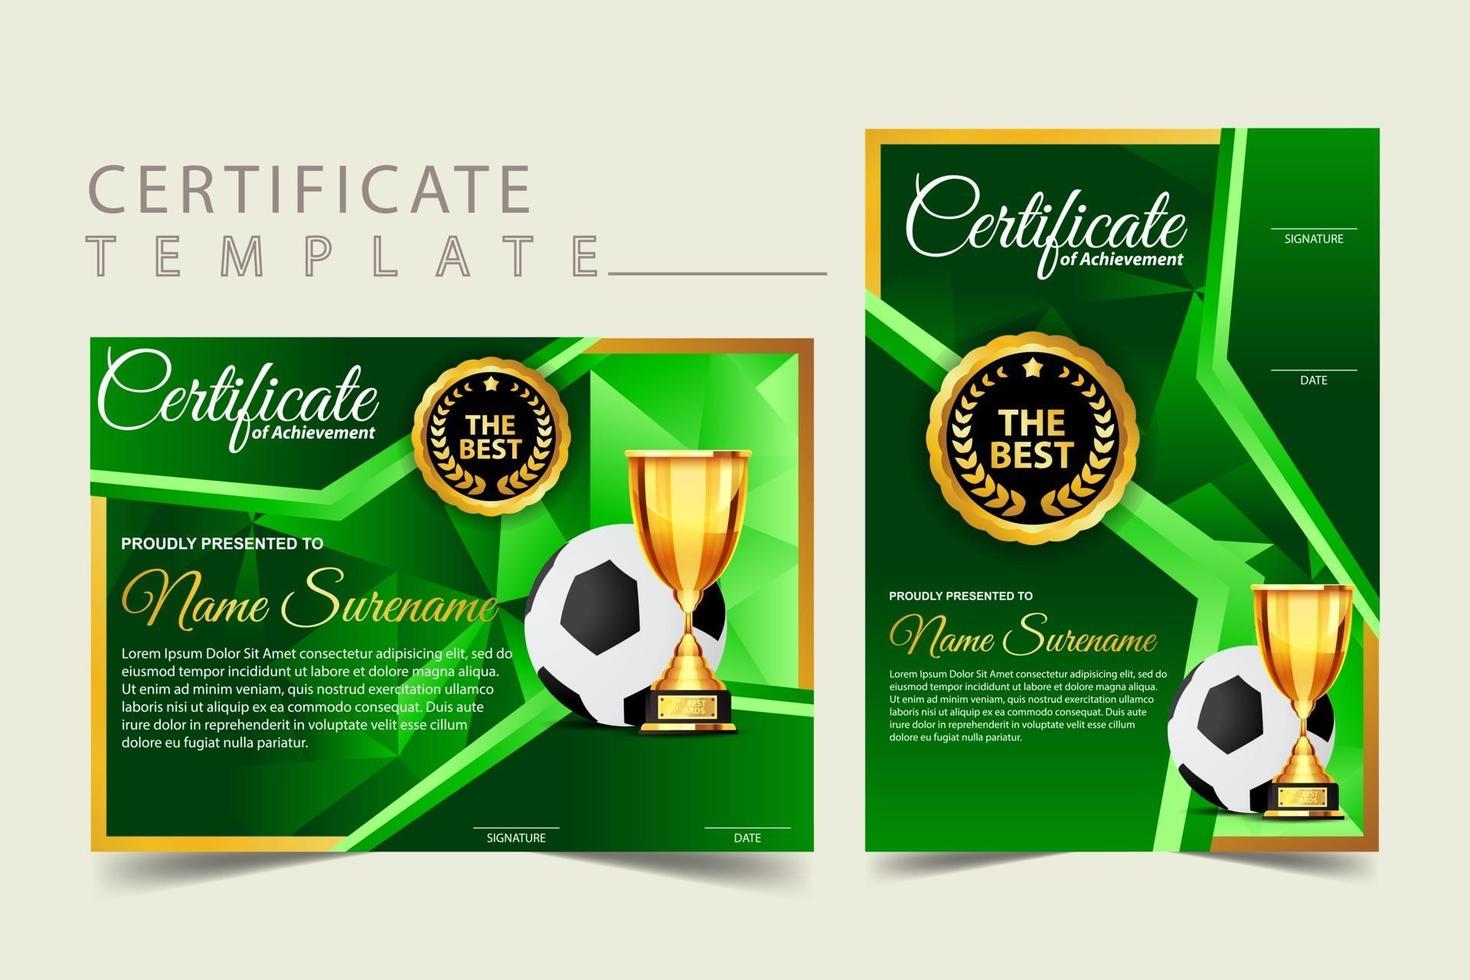 fotboll spel certifikat diplom med gyllene cup set vektor